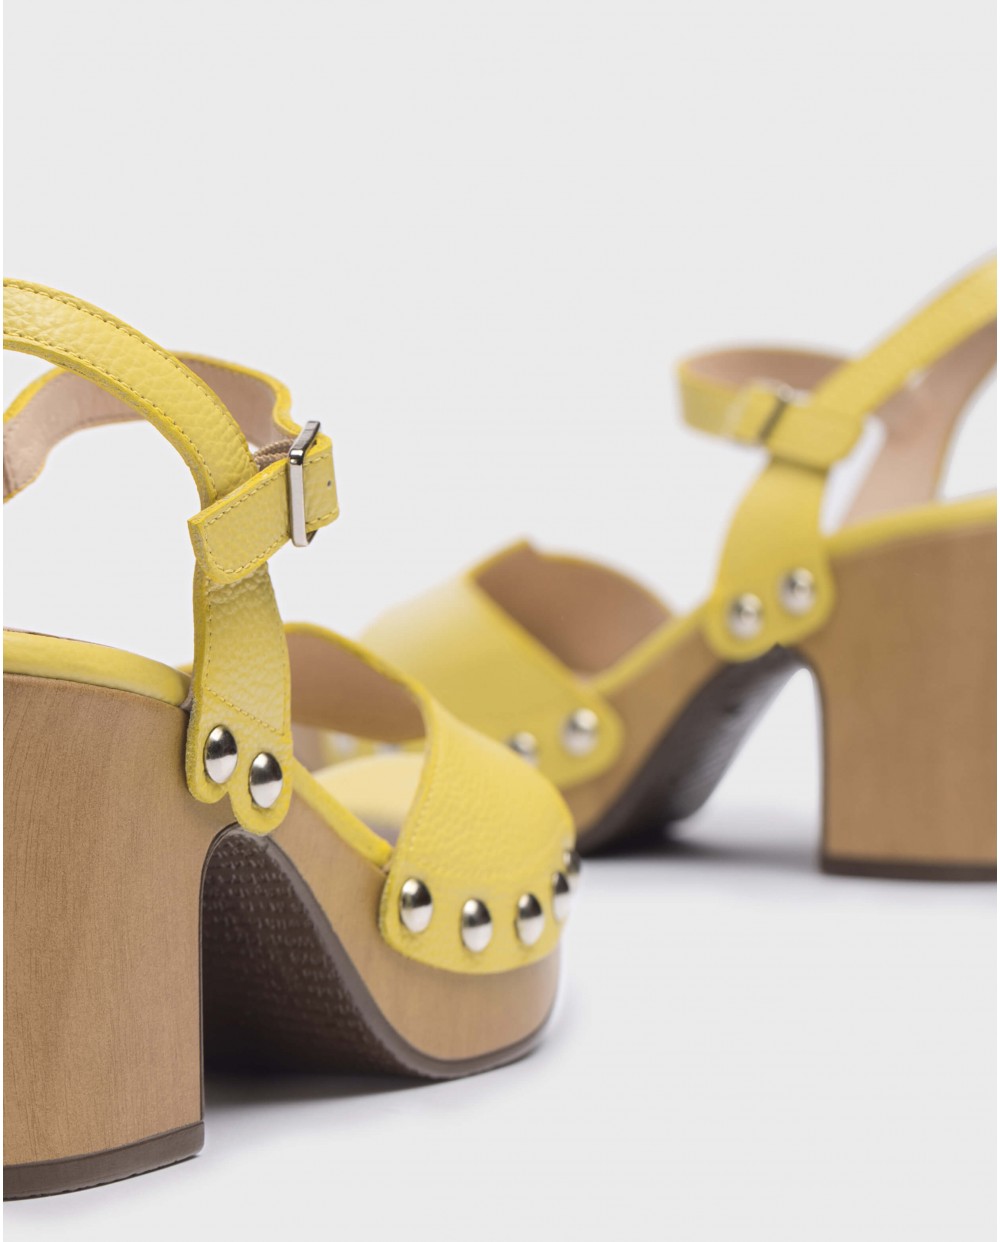 Wonders-Sandals-Yellow Lexi shoe